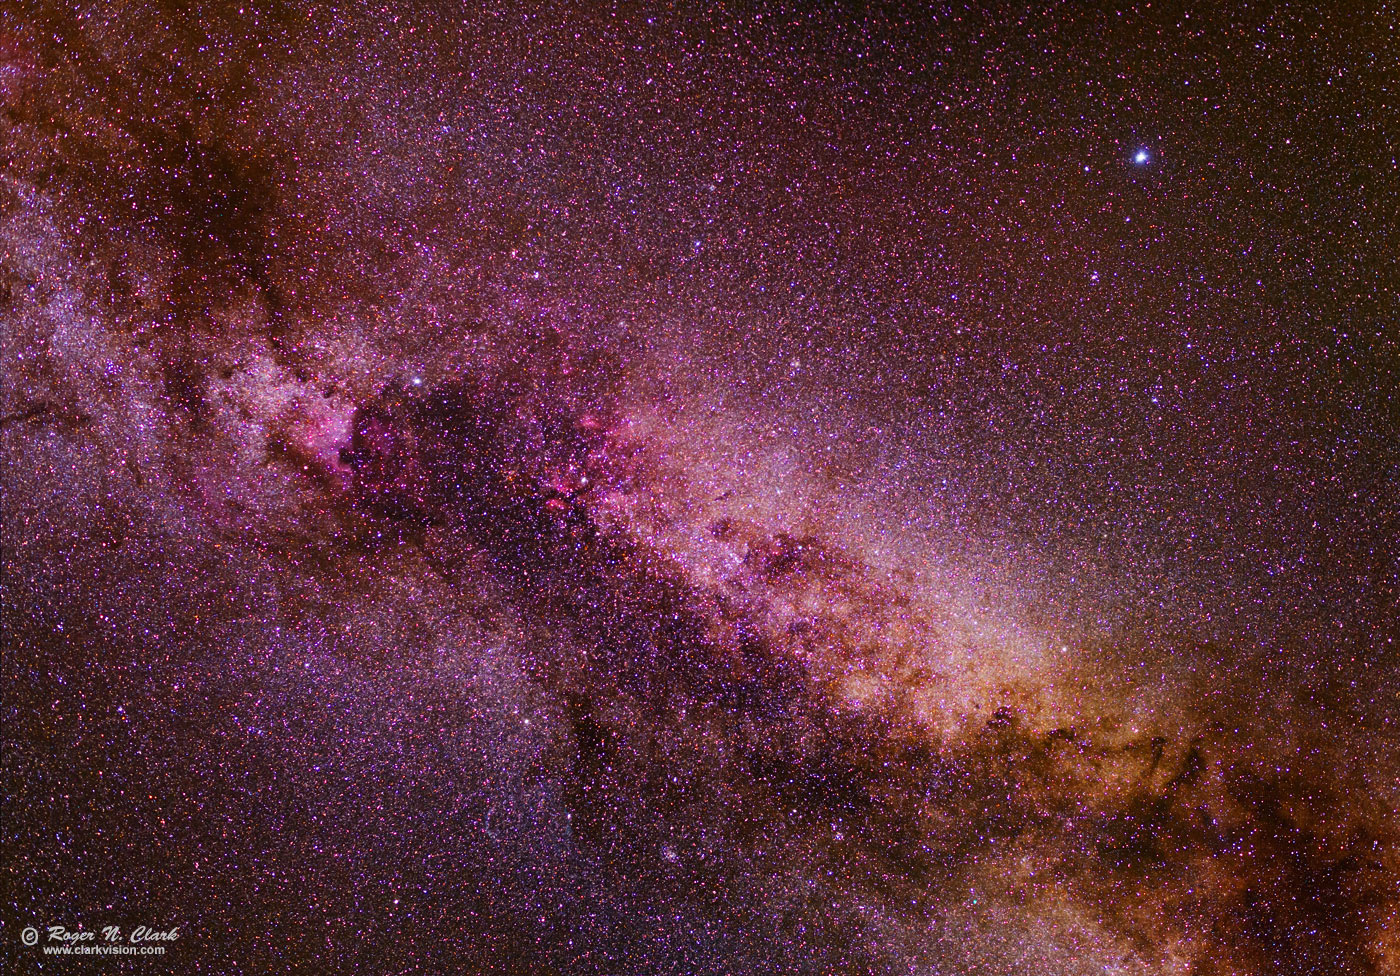 image cygnus-35mm-f1.4-45sec.c09.29.2013.C45I4023-35.f-1400s.jpg is Copyrighted by Roger N. Clark, www.clarkvision.com